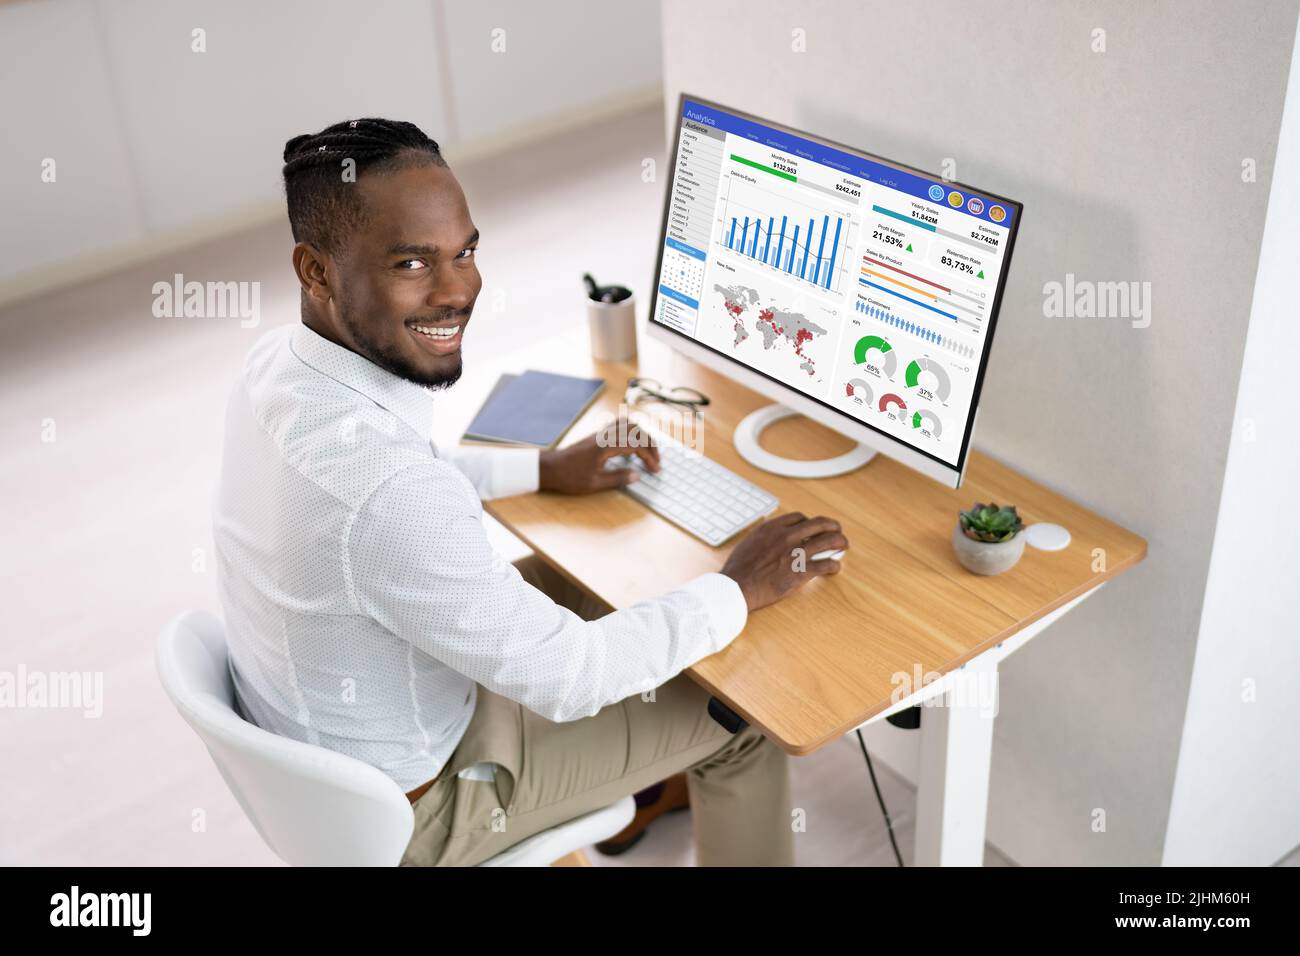 Analyst Man Looking At Business Data Analytics Dashboard Stock Photo